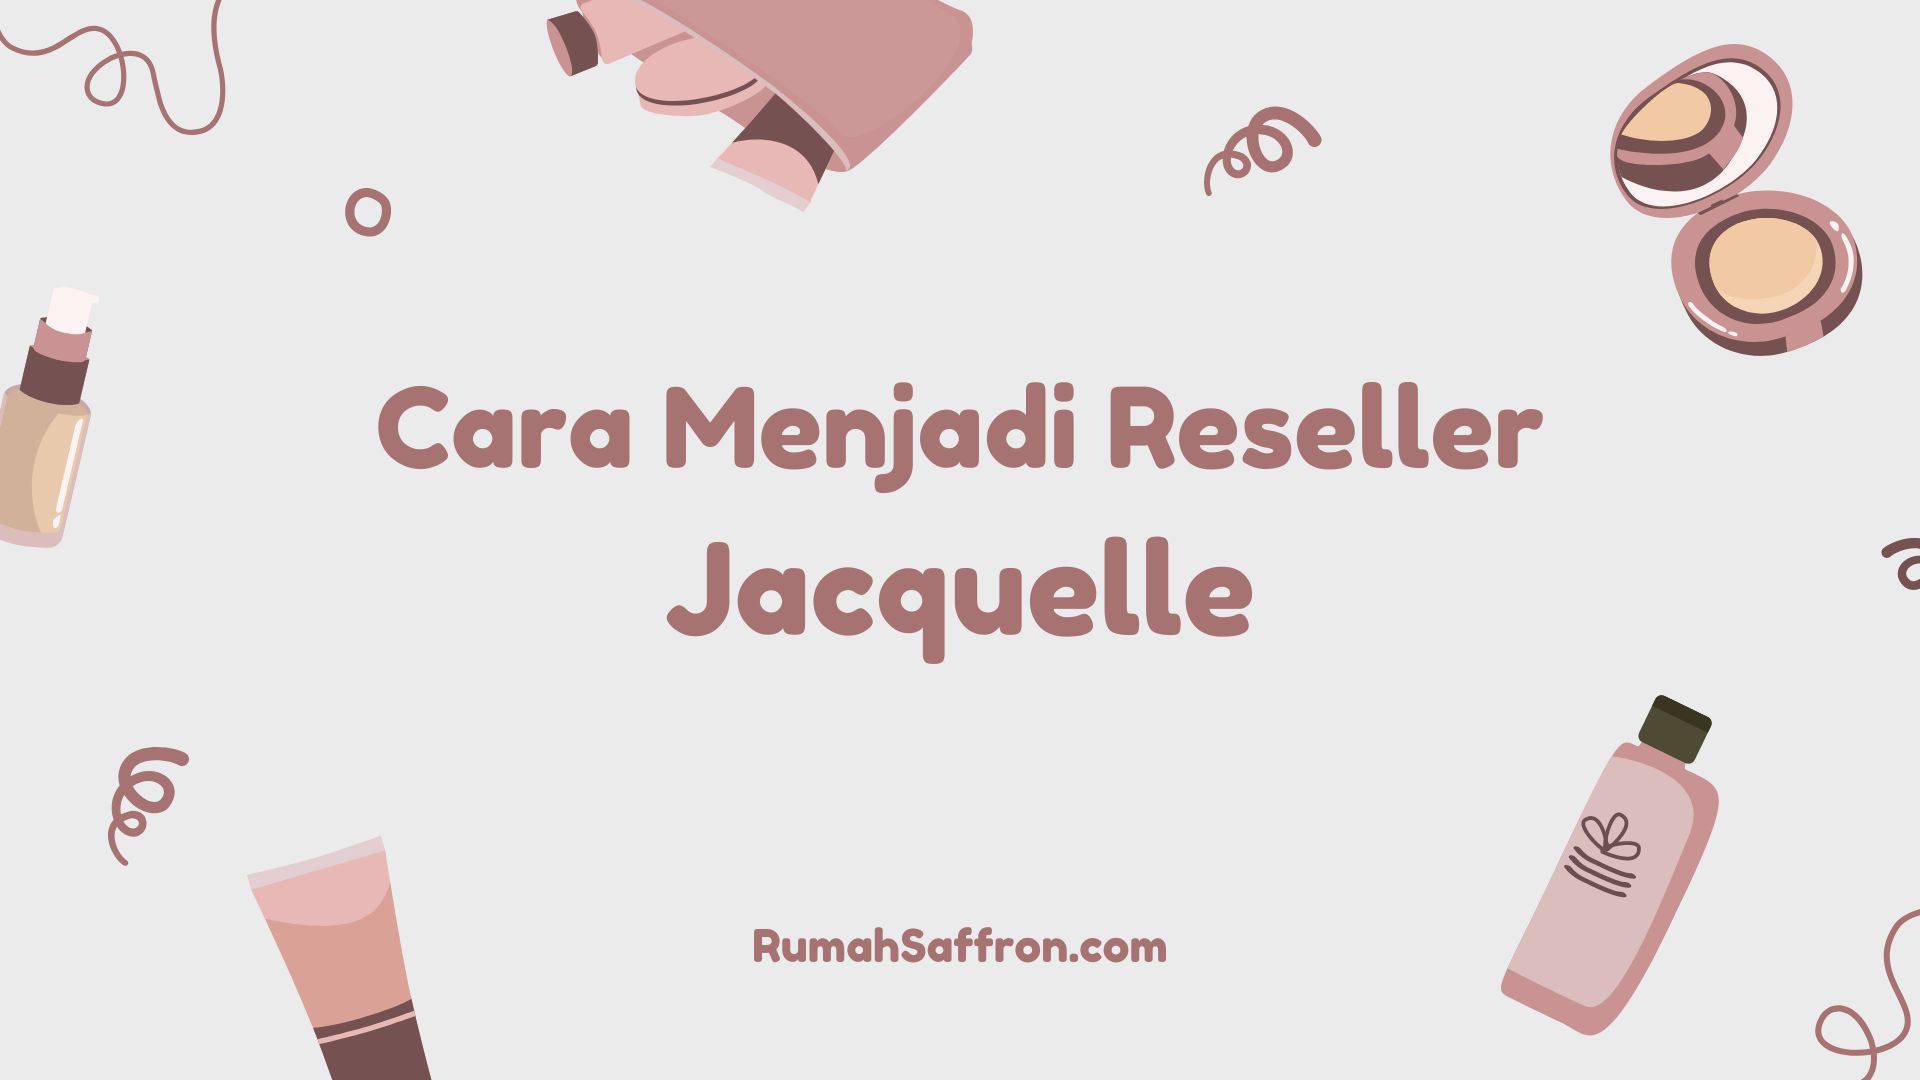 cara menjadi reseller jacquelle, keuntungan menjadi reseller jacquelle, kelebihan produk jacquelle, cara daftar reseller jacquelle, cara daftar agen jacquelle, cara daftar distributor jacquelle, distributor jacquelle, reseller jacquelle, cara promosi jacquelle, syarat menjadi reseller jacquelle